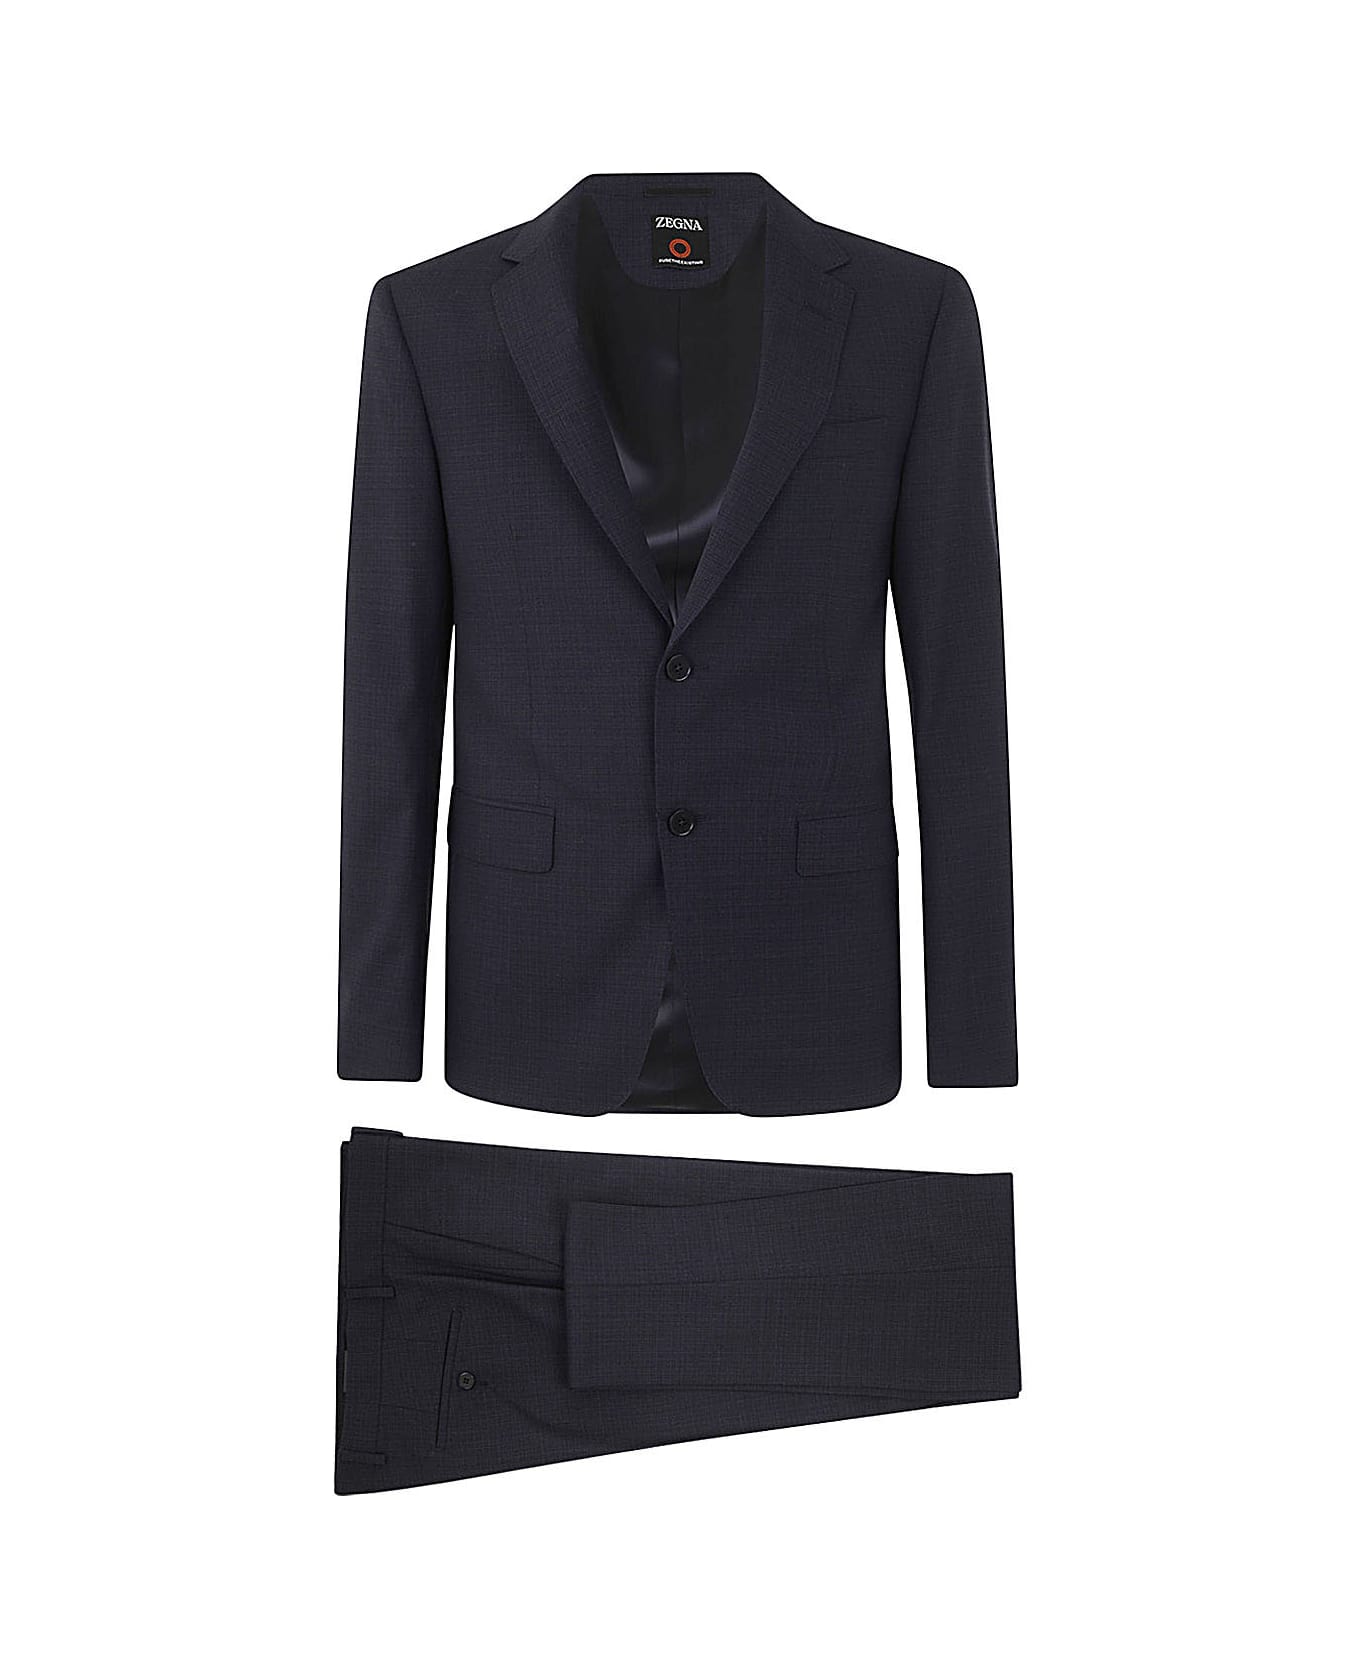 Zegna Usetheexisting Suit - Blue